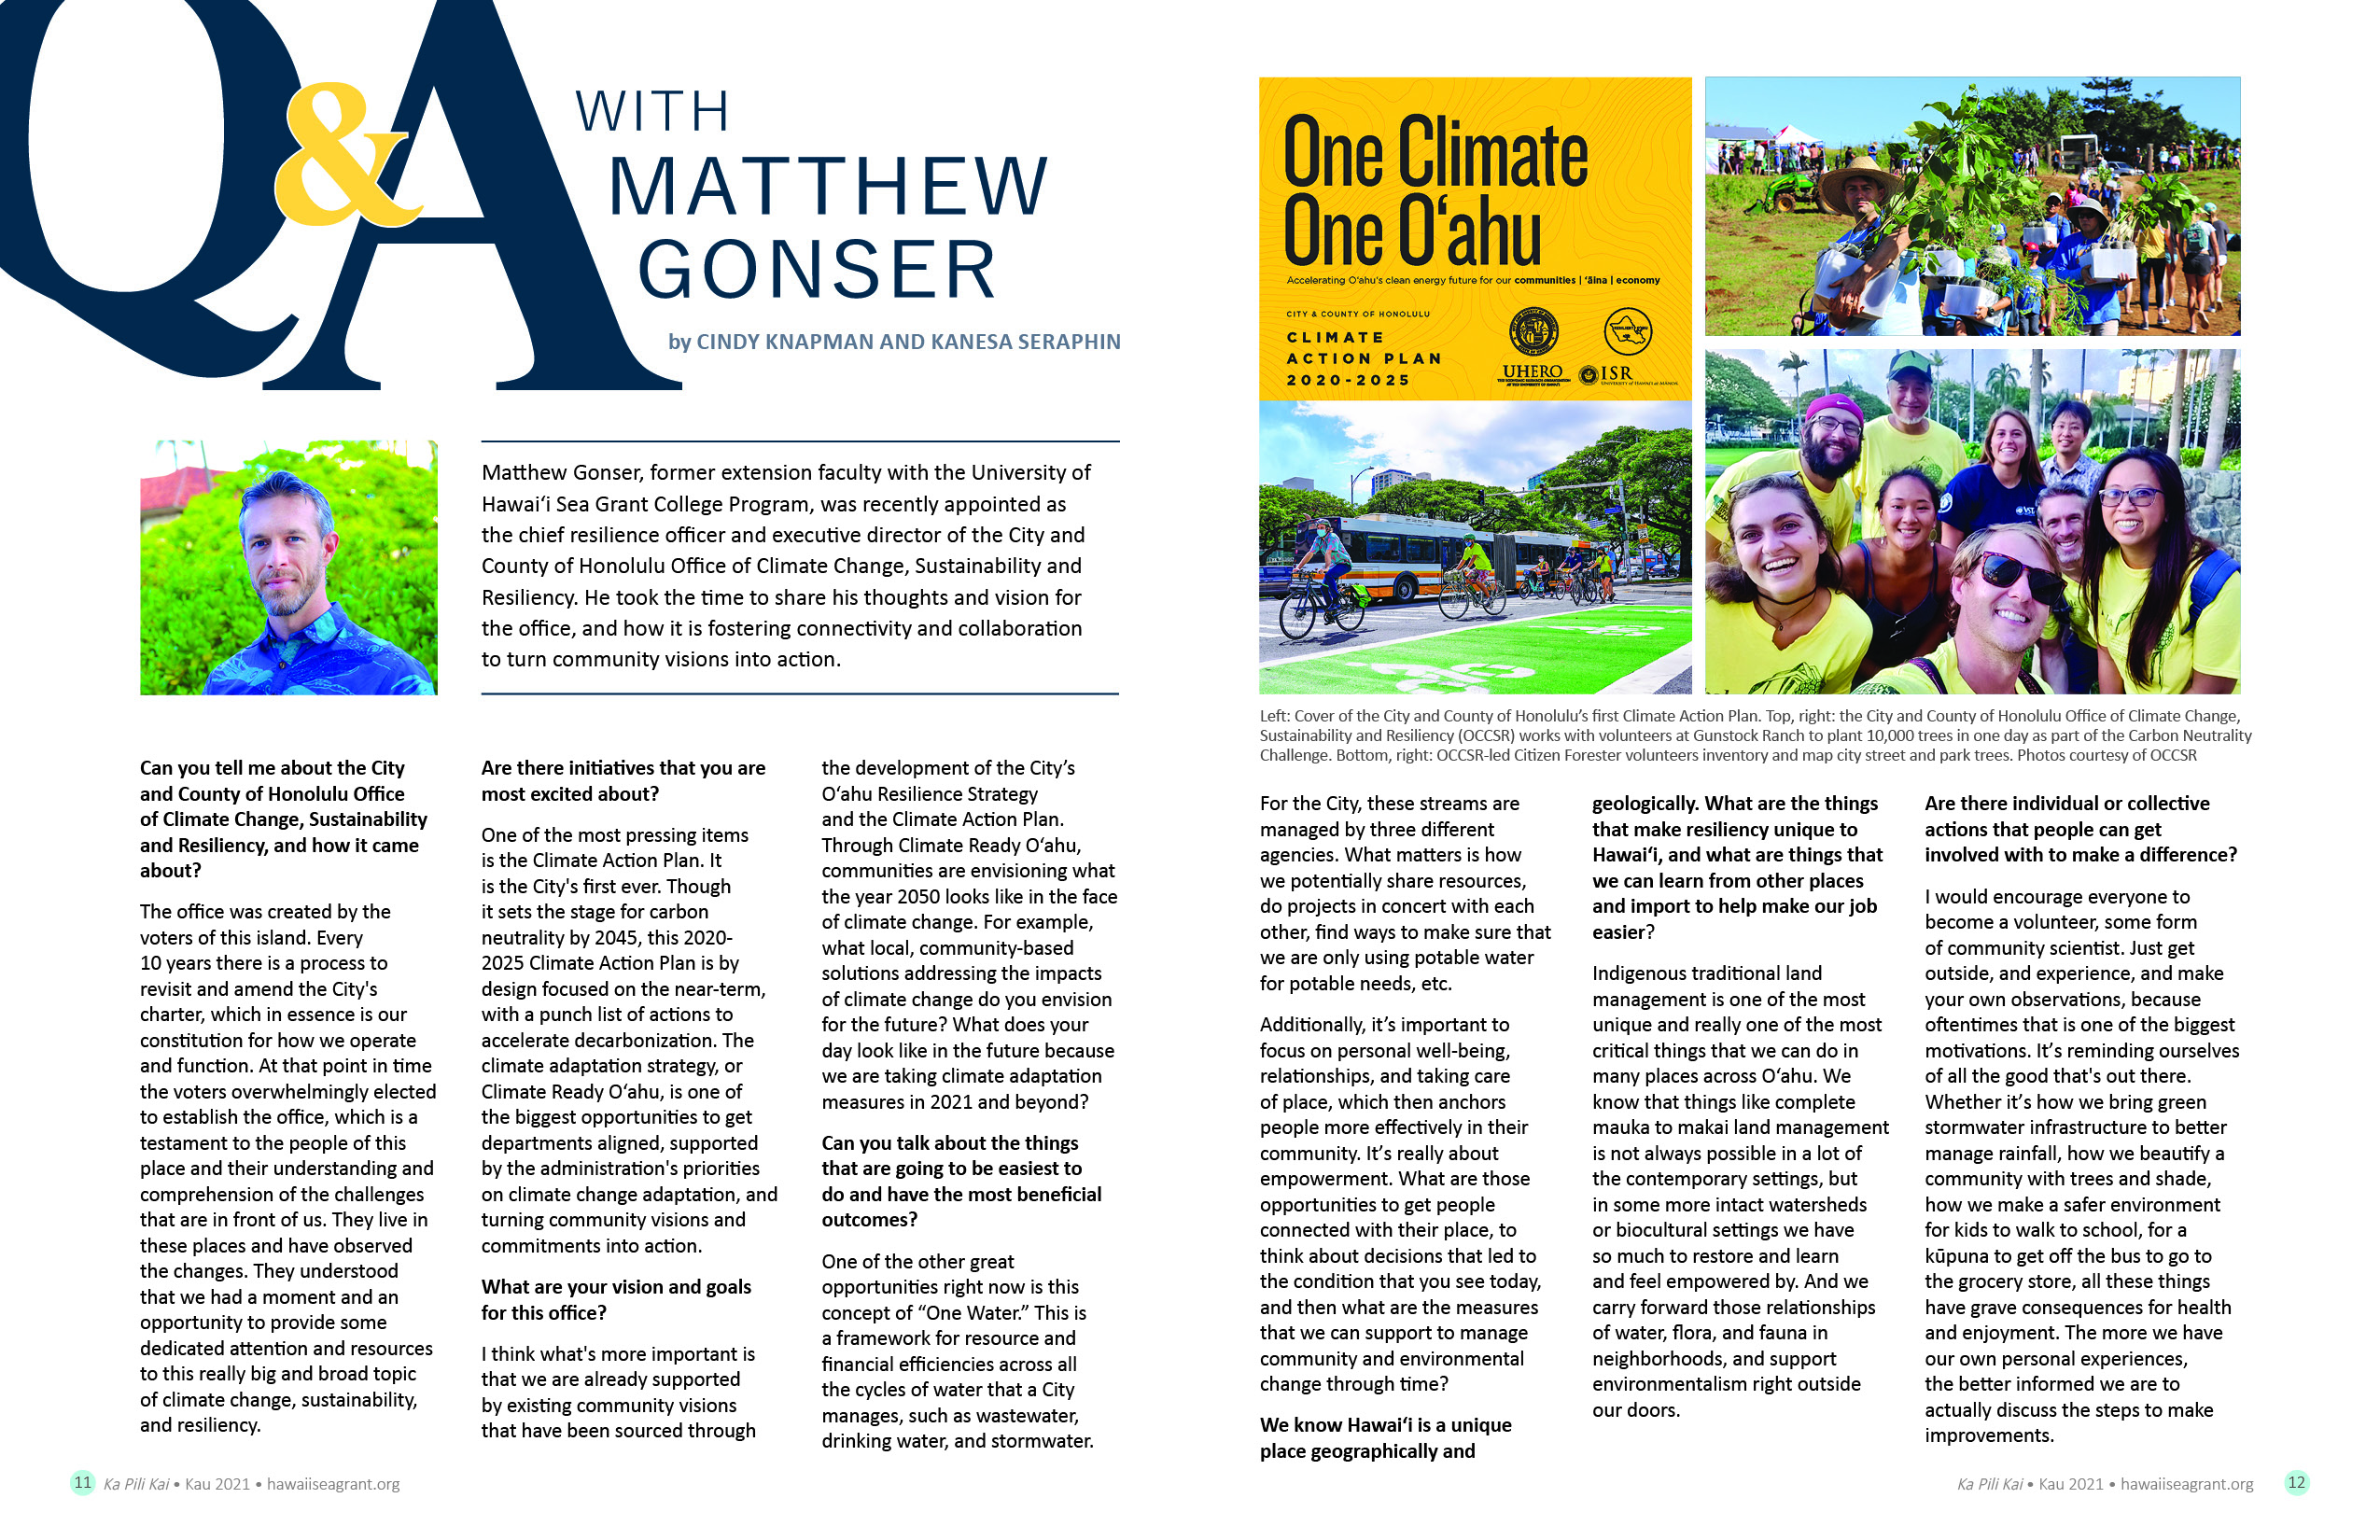 article spread including headshot of Matt Gonser and community volunteers